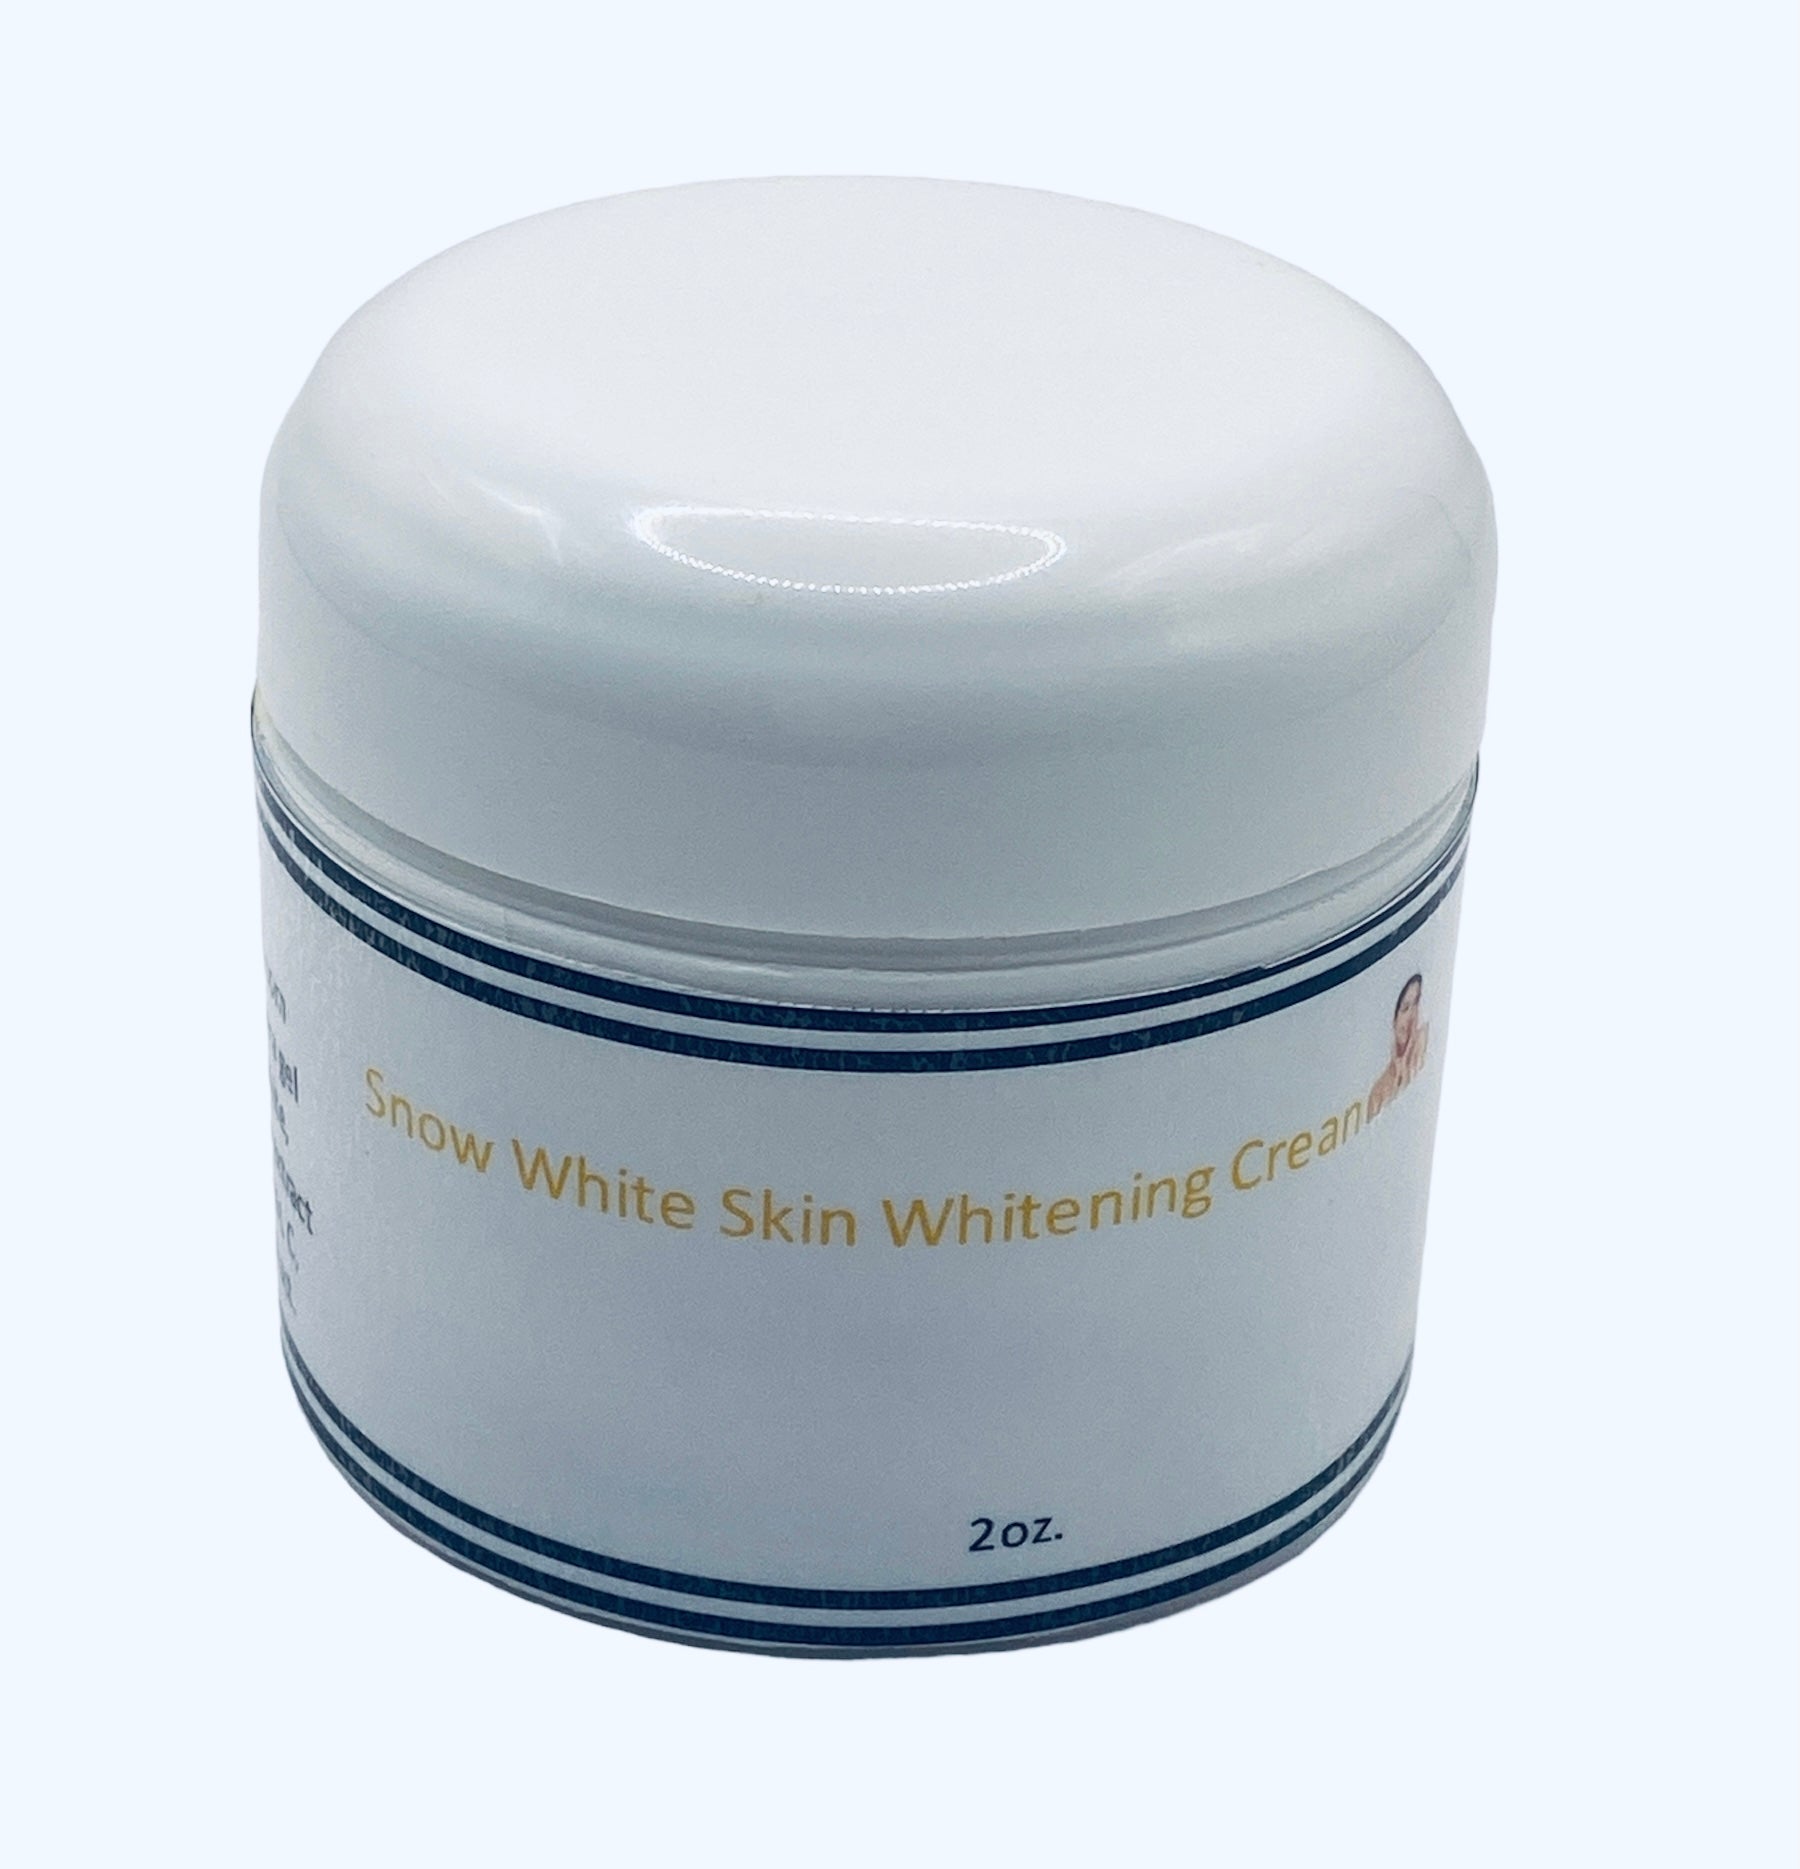 Snow White skin whitening cream